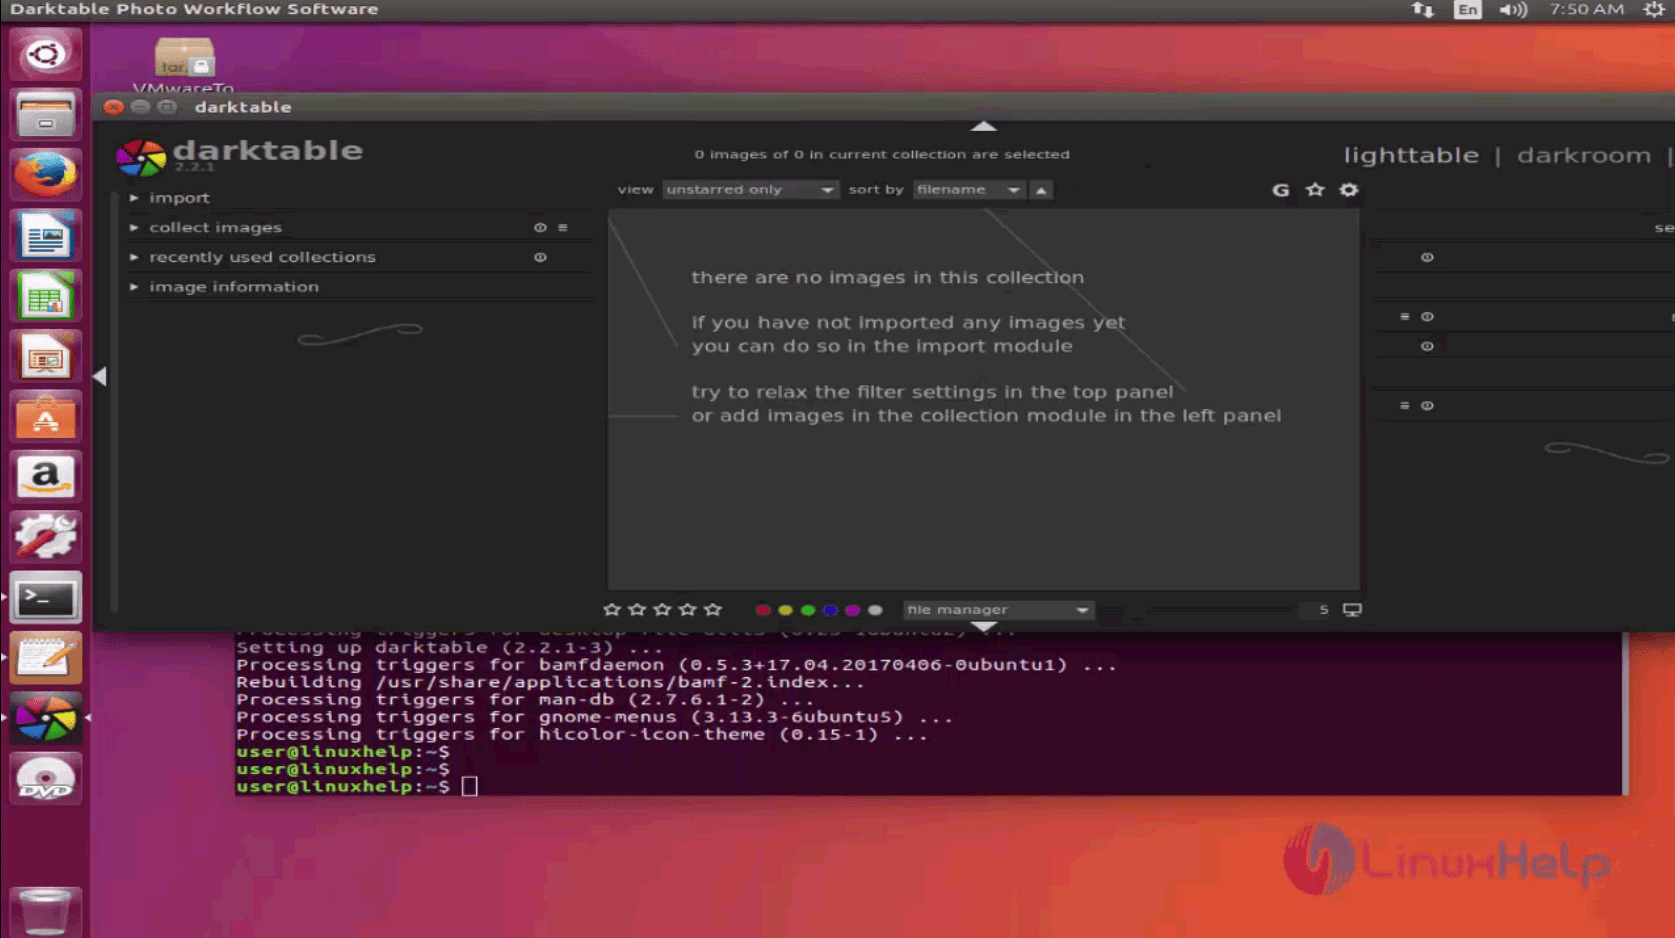 how to install darktable ubuntu 16.04